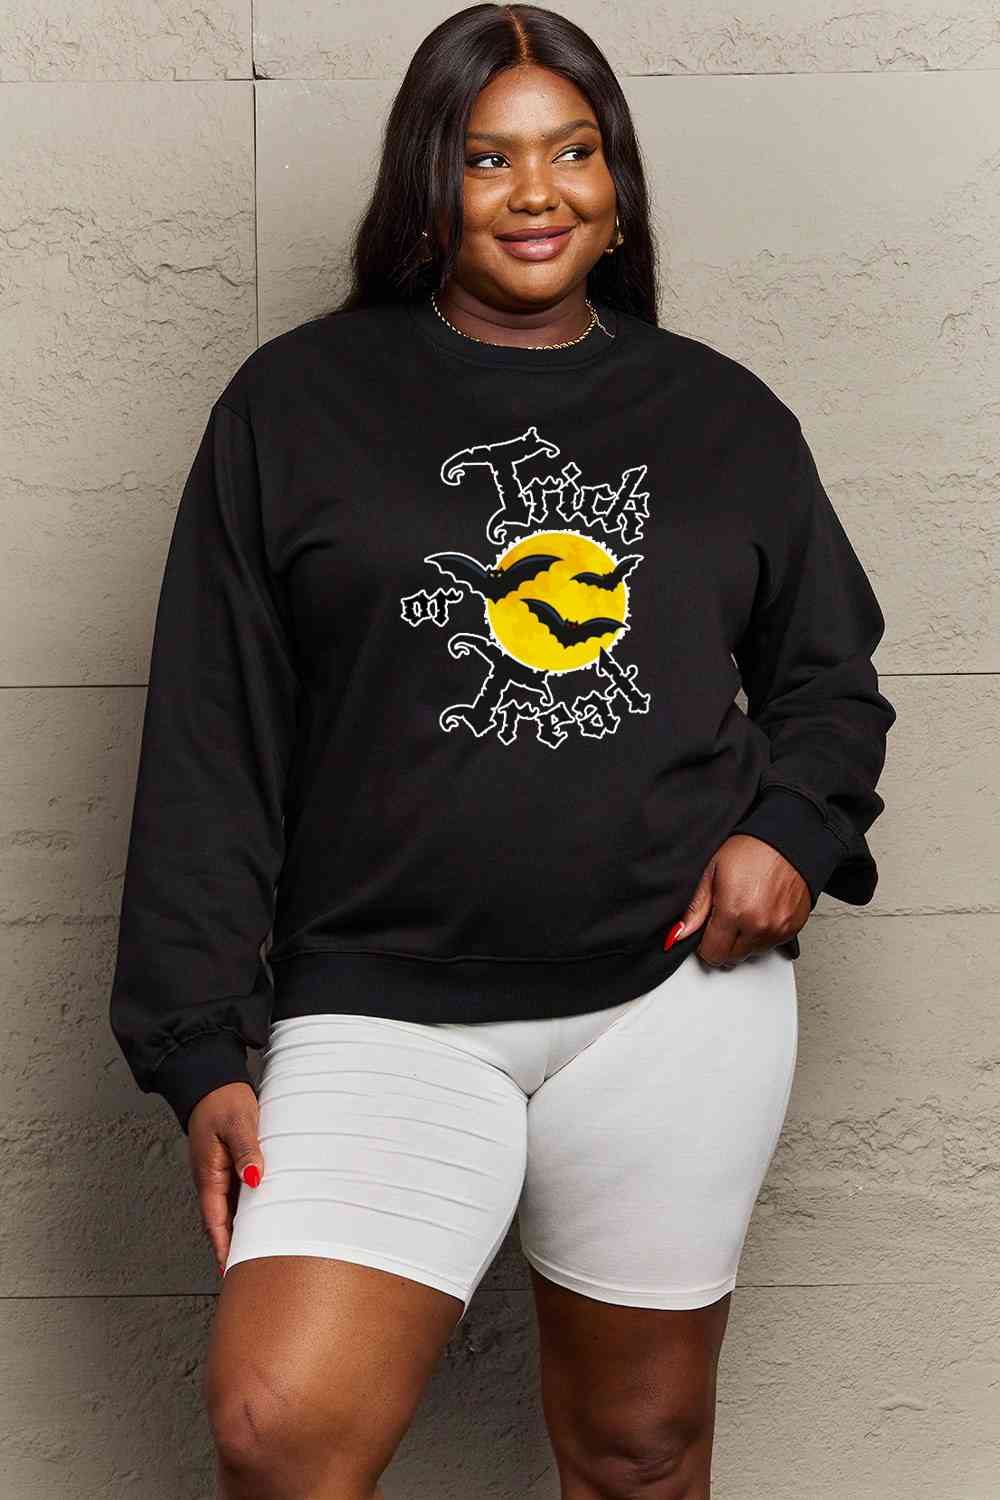 Simply Love Full Size TRICK OR TREAT Graphic Sweatshirt, MyriadMart